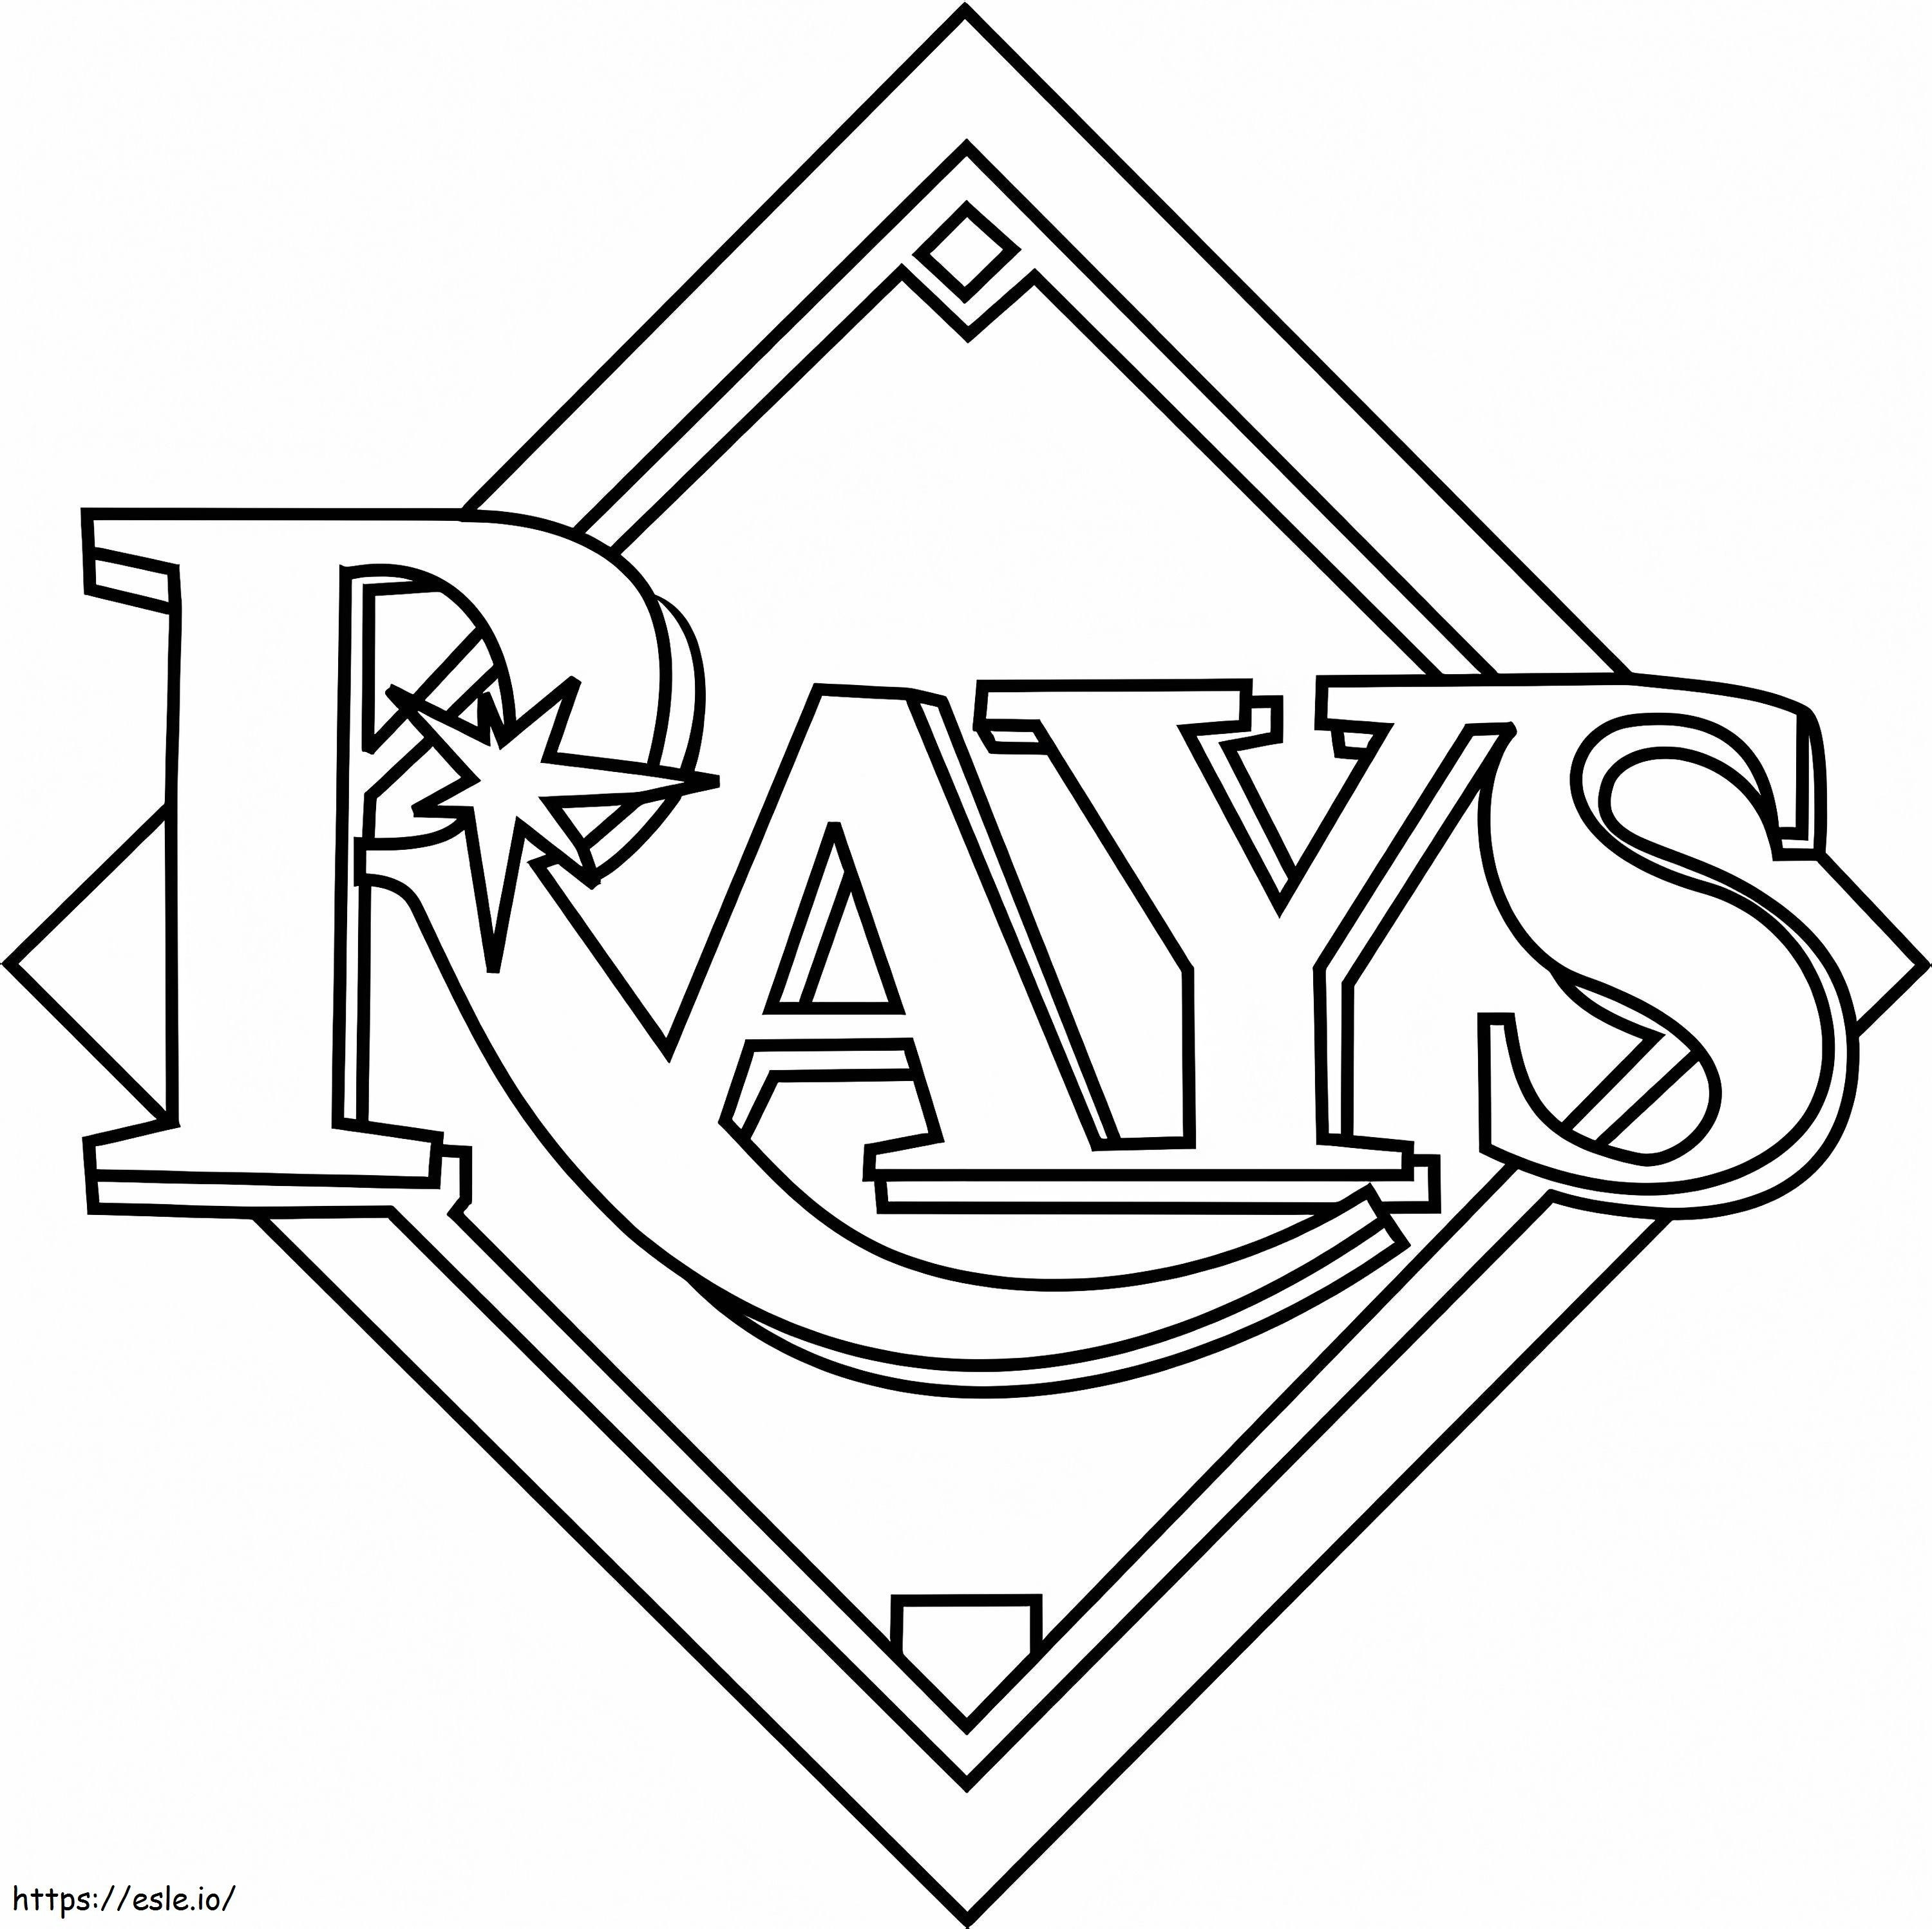 Tampa Bay Rays Logosu boyama